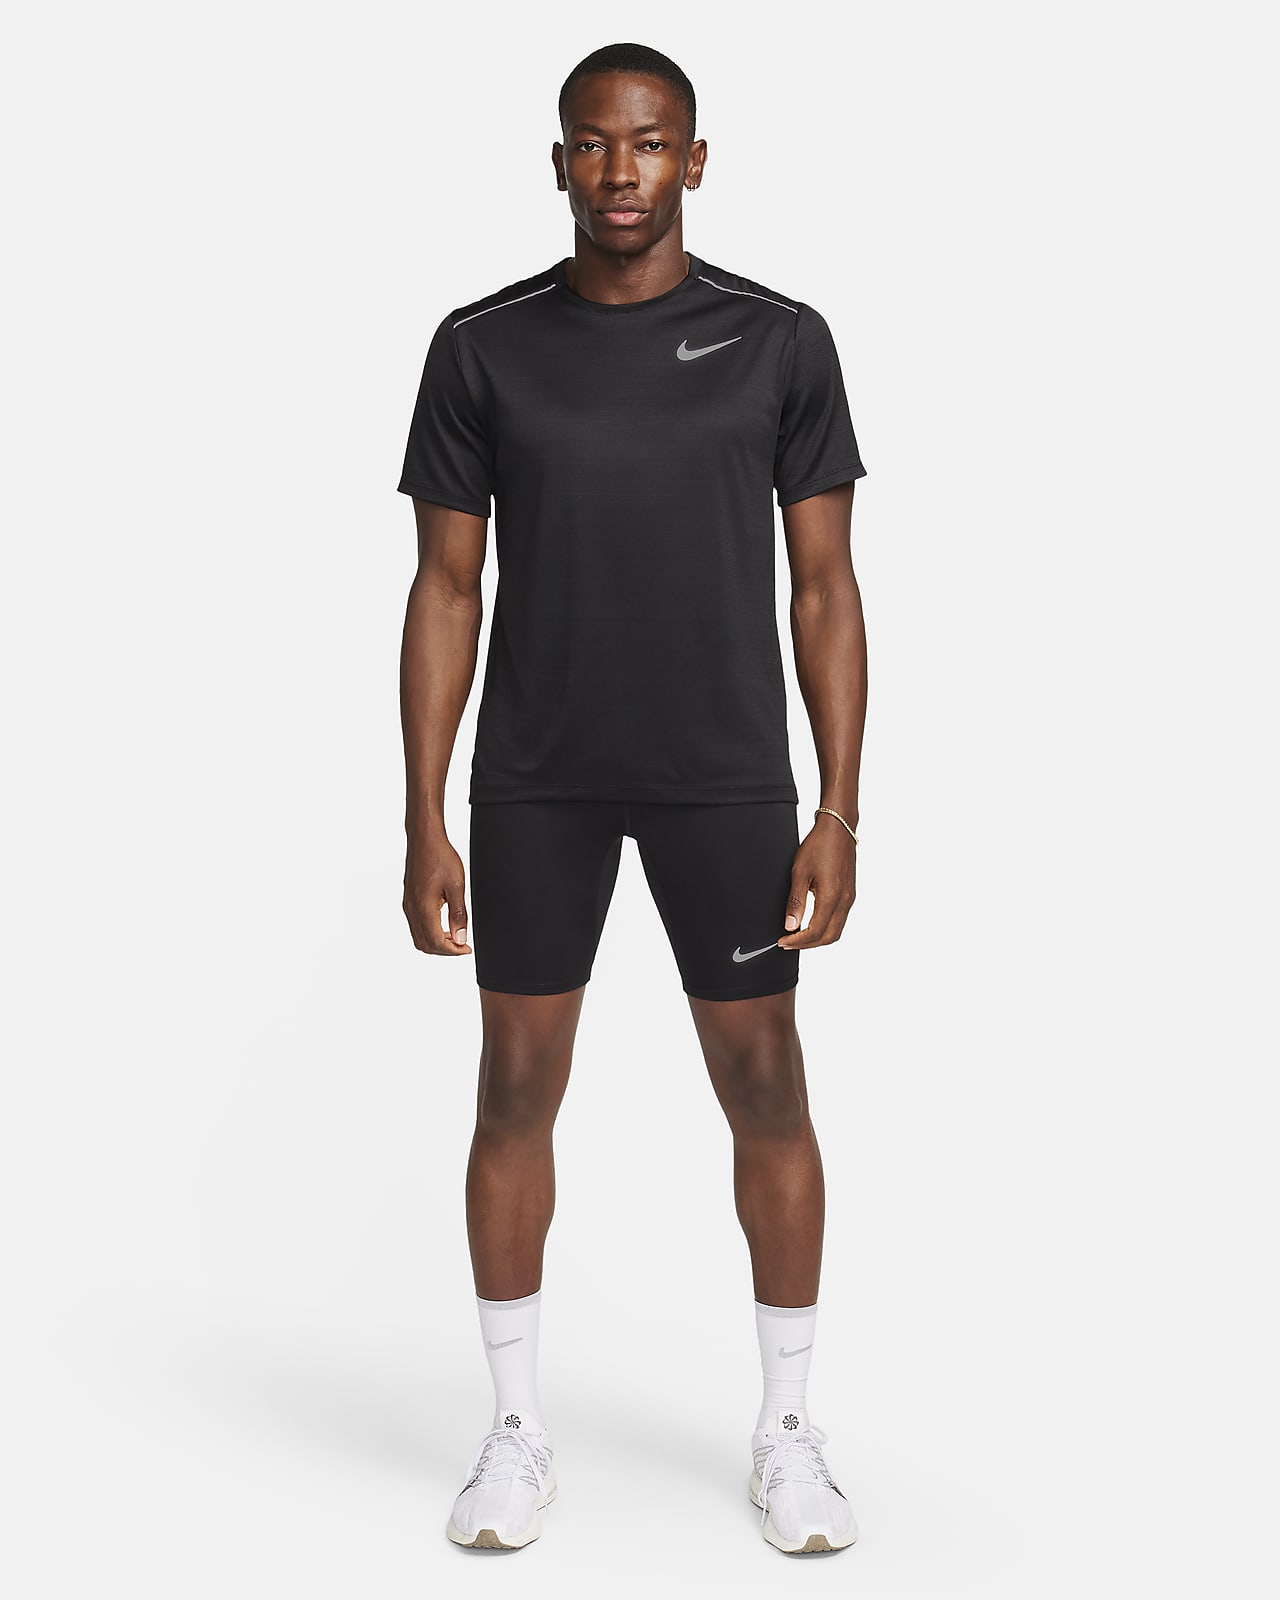 Compression Shorts & Tights. Nike NL